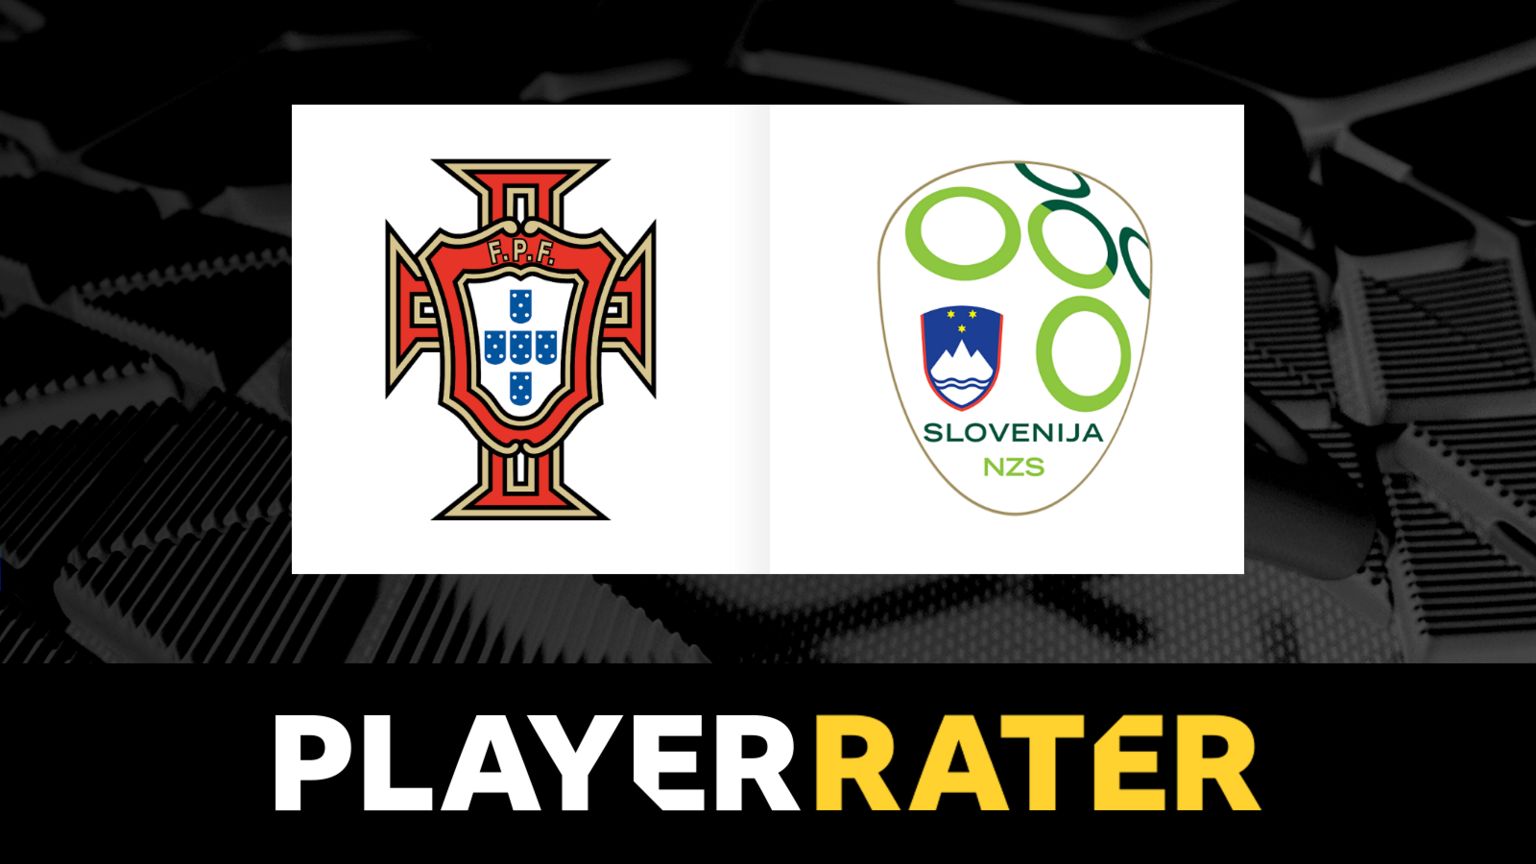 Portugal v Slovenia player rater